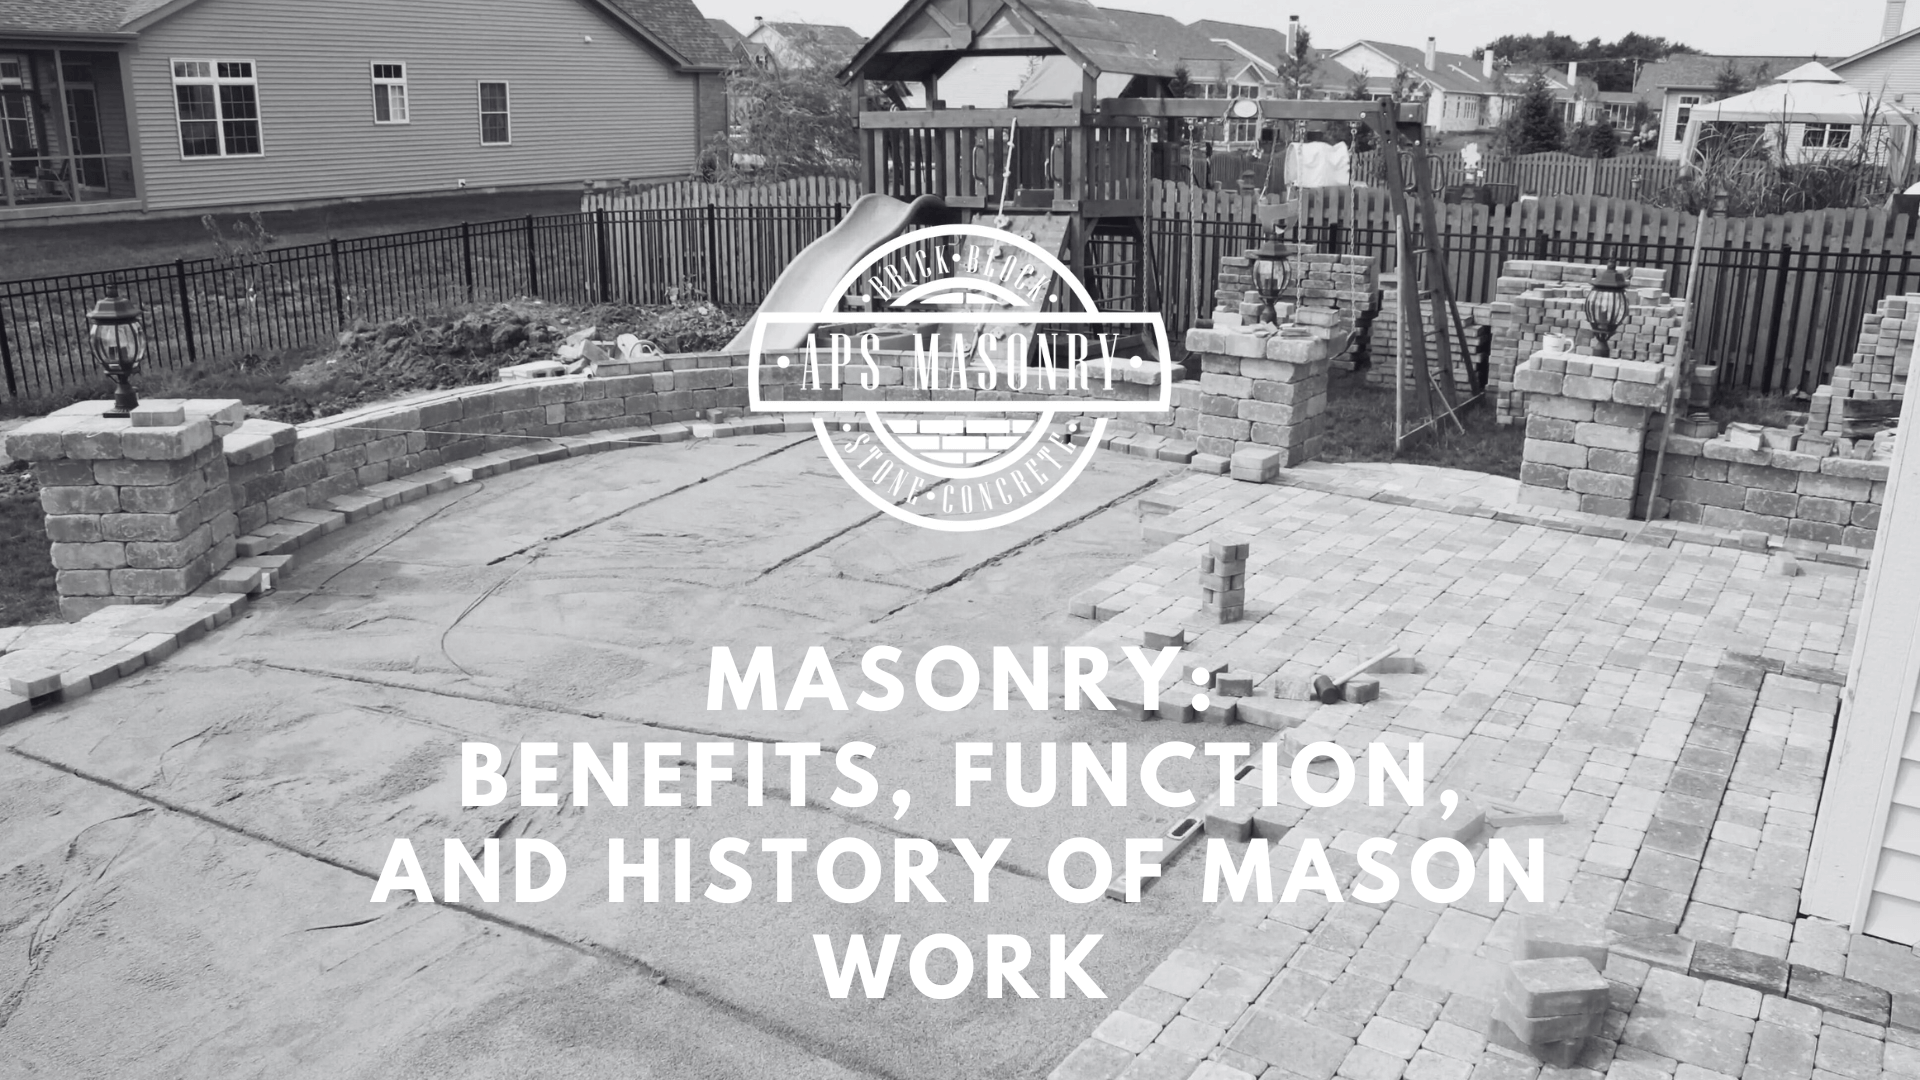 Masonry: Benefits, Function, and History